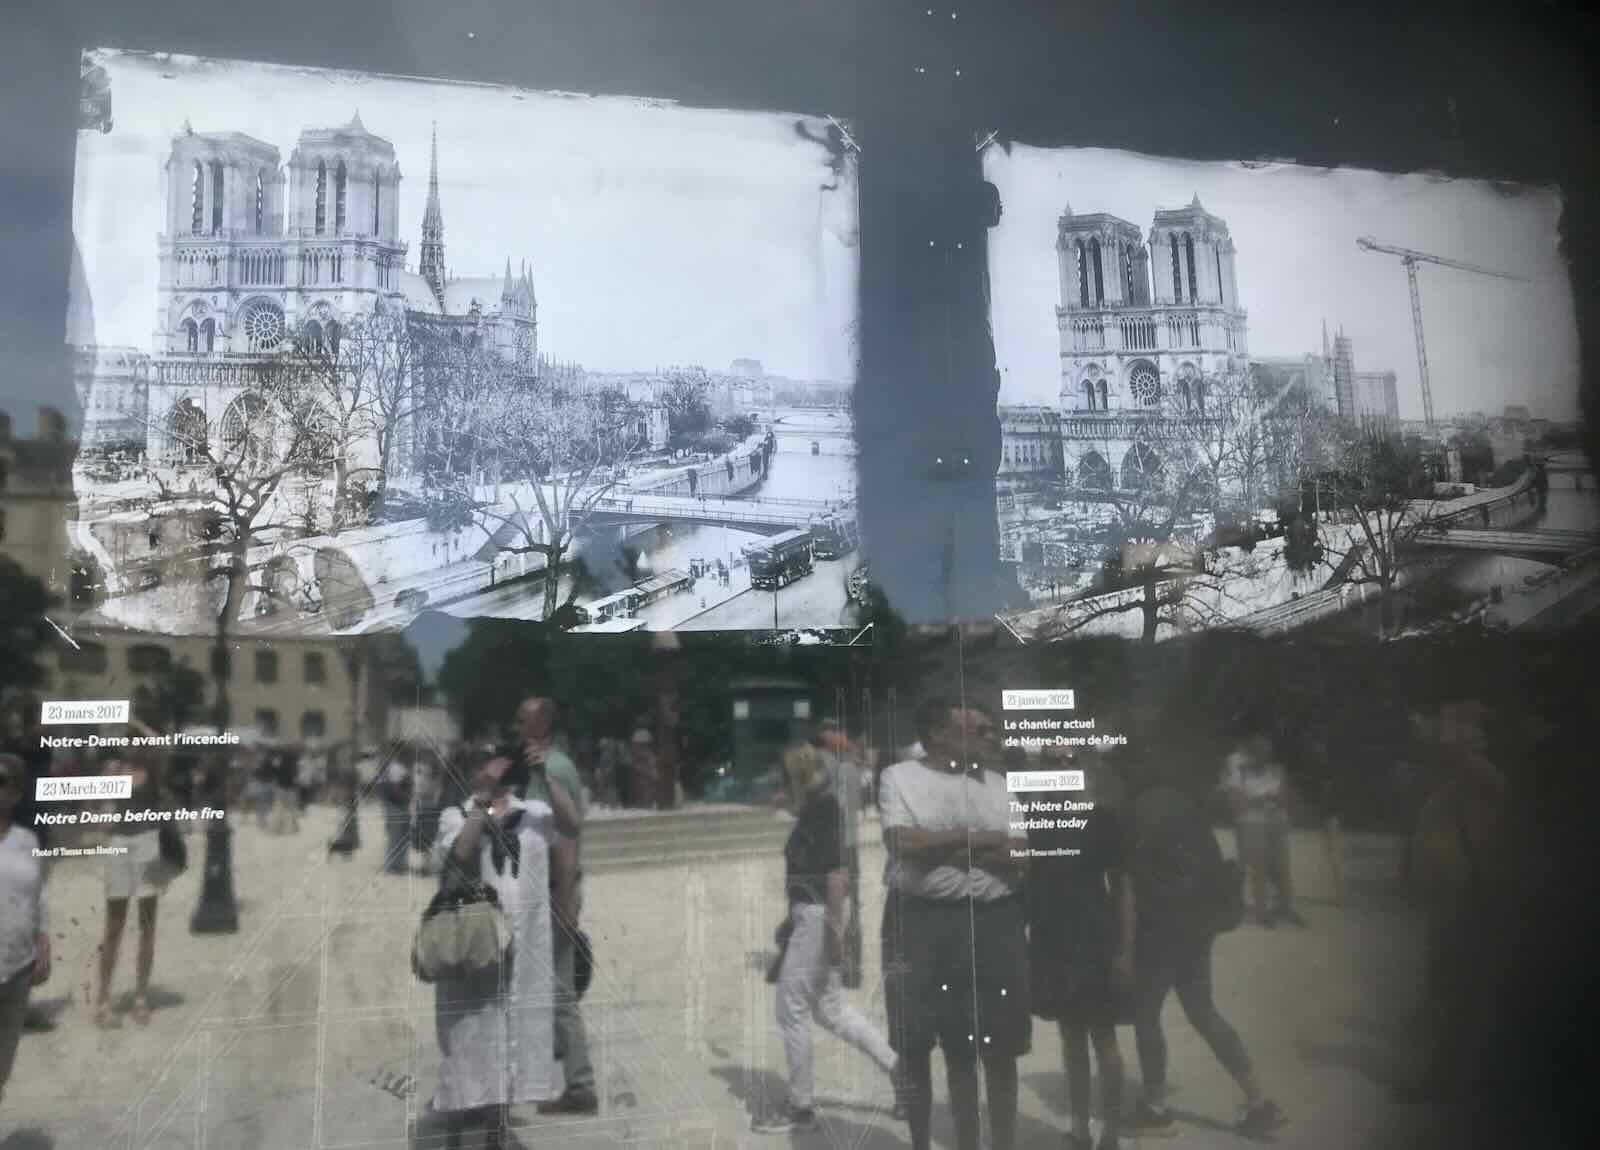 restoration progress billboard and crowd at Notre Dame de Paris